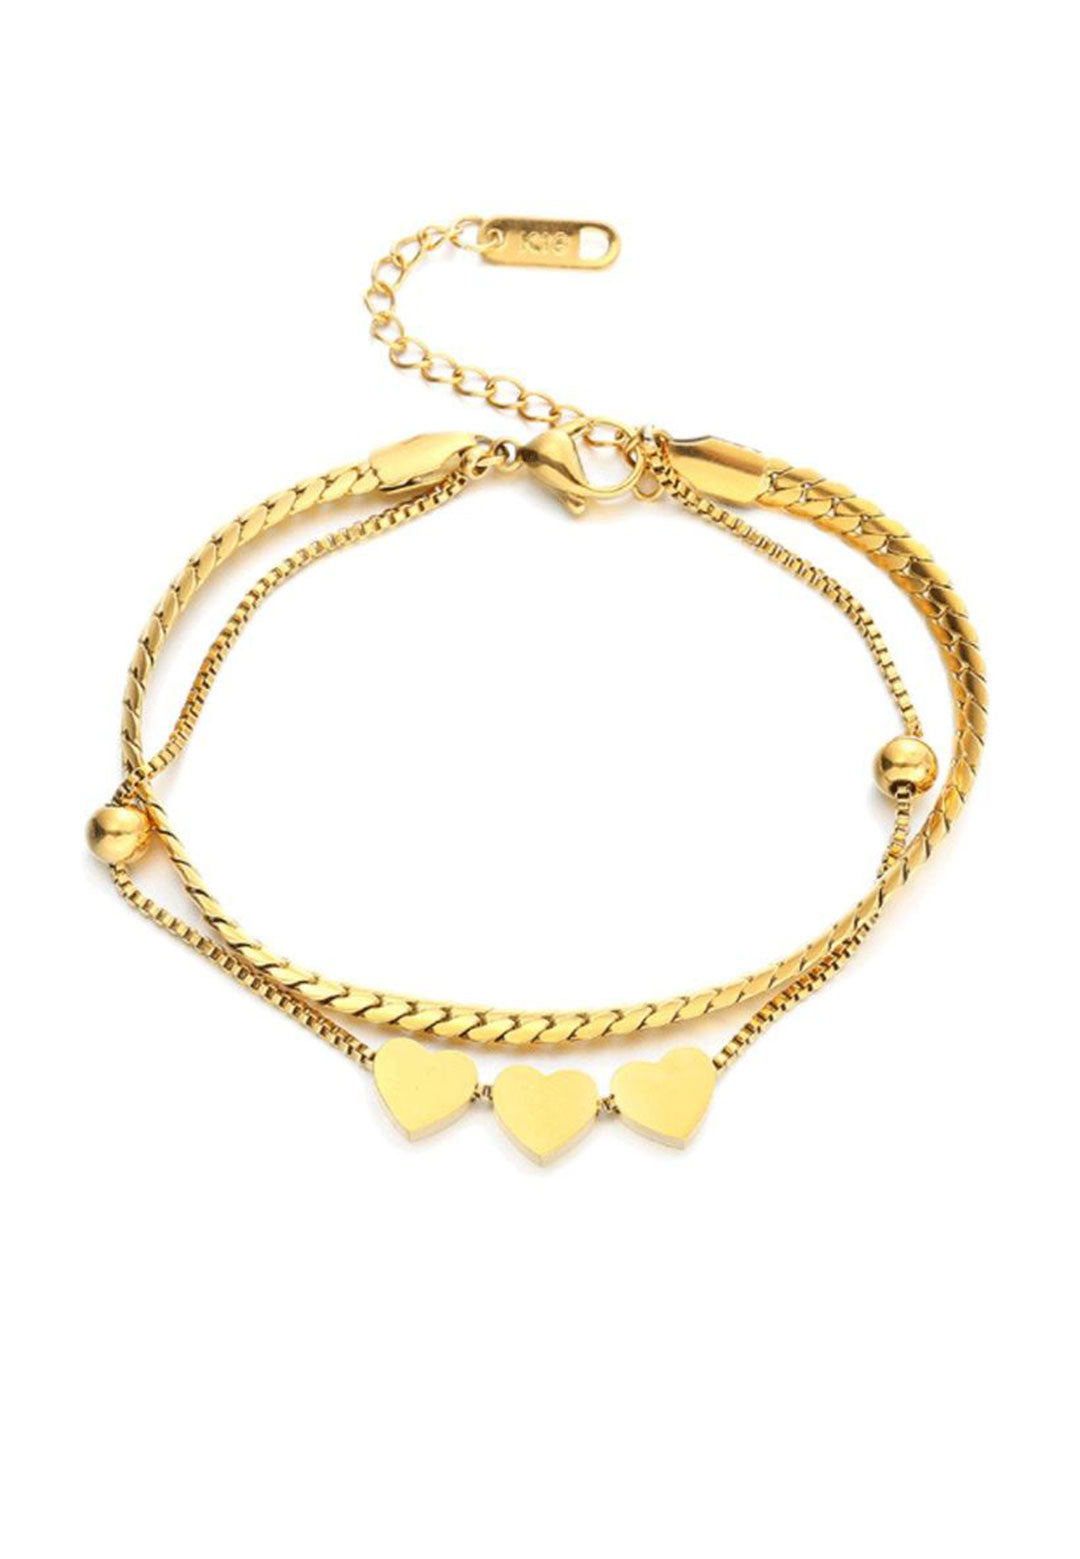 Celovis Jewellery Lovett Dainty Heart Charm Pendant with Herringbone Multi-Layer Chain Bracelet